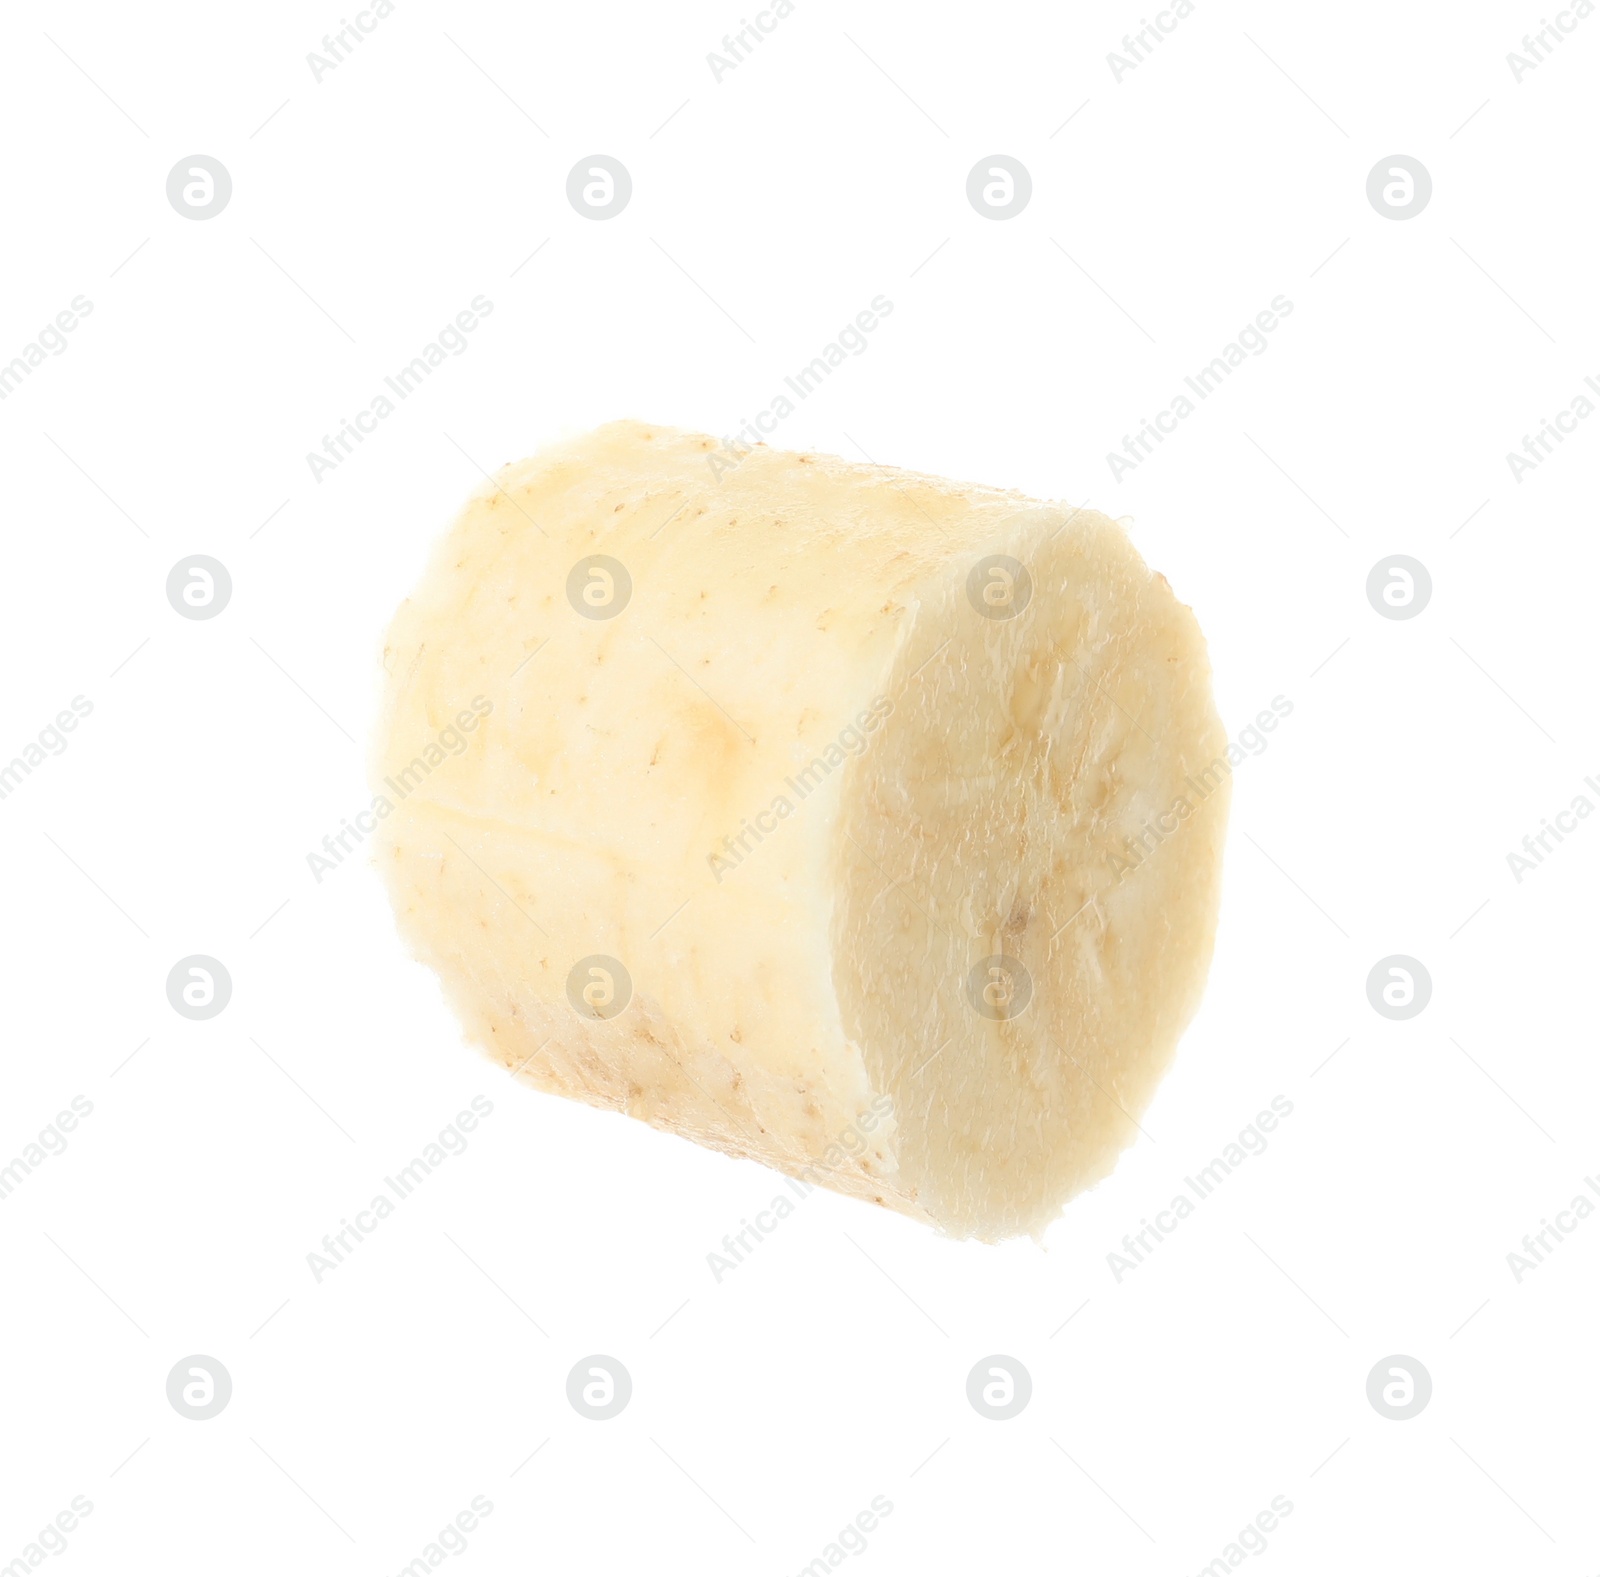 Photo of Piece of tasty ripe banana isolated on white